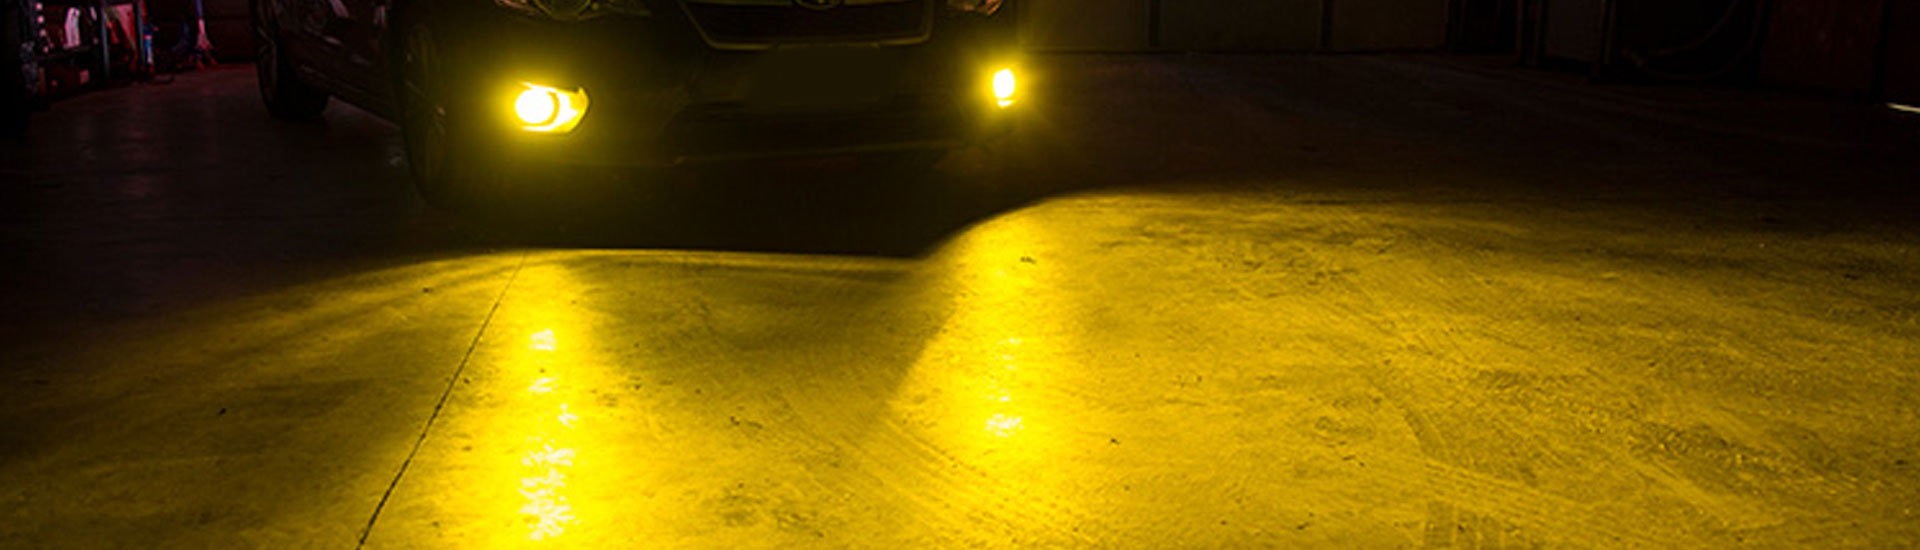 Volvo S40 Fog Light Tint Covers